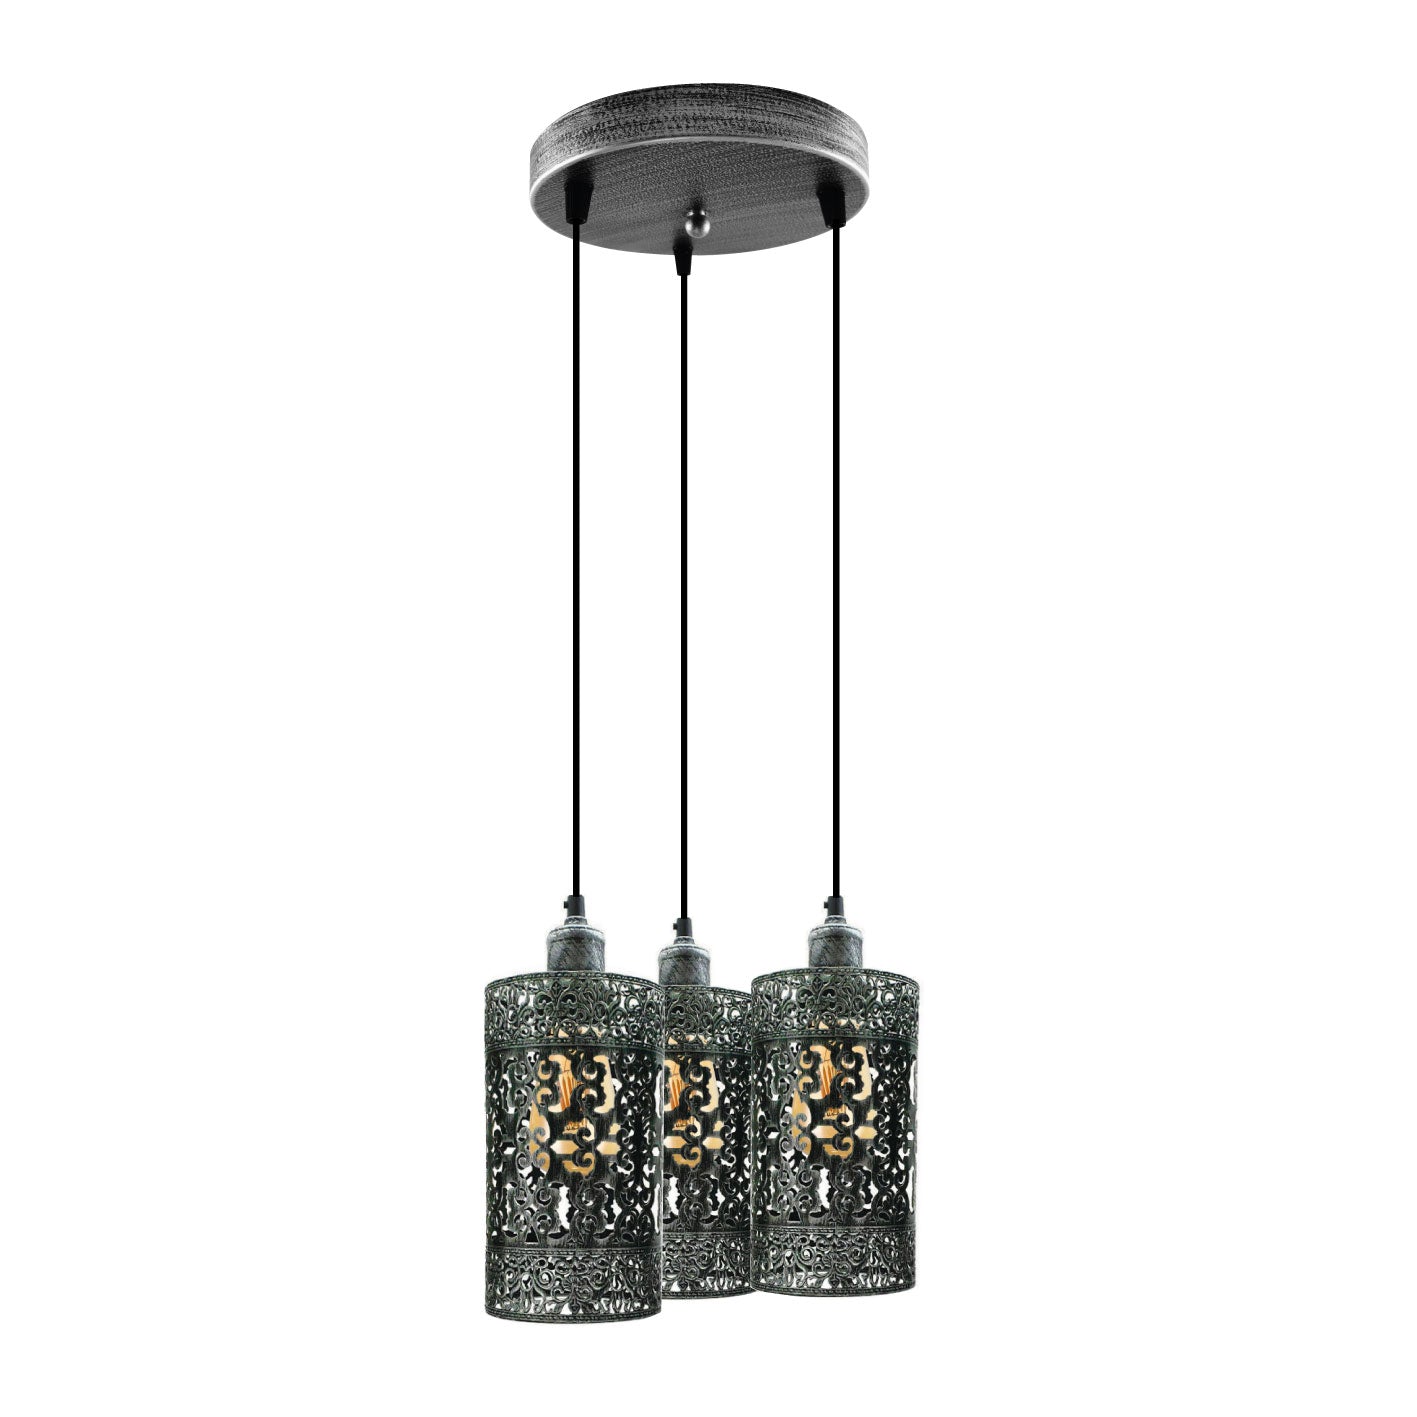 Kitchen Restaurant Drum Barrel Cage 3 Light Pendant Ceiling Light